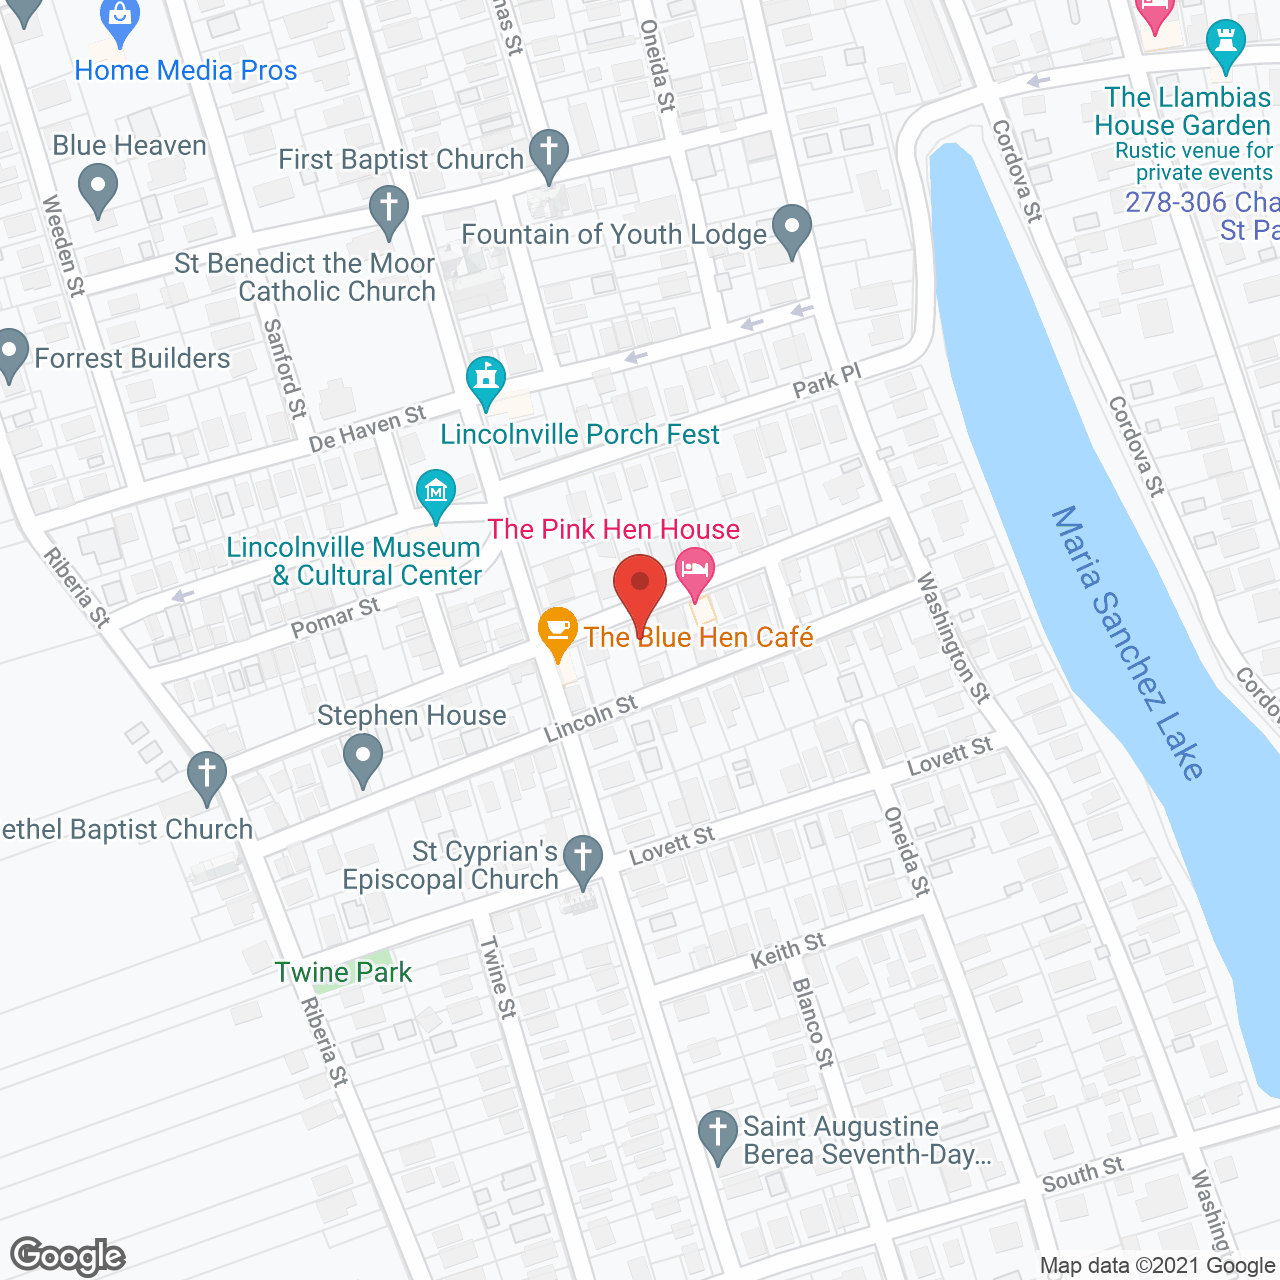 Allegro in google map